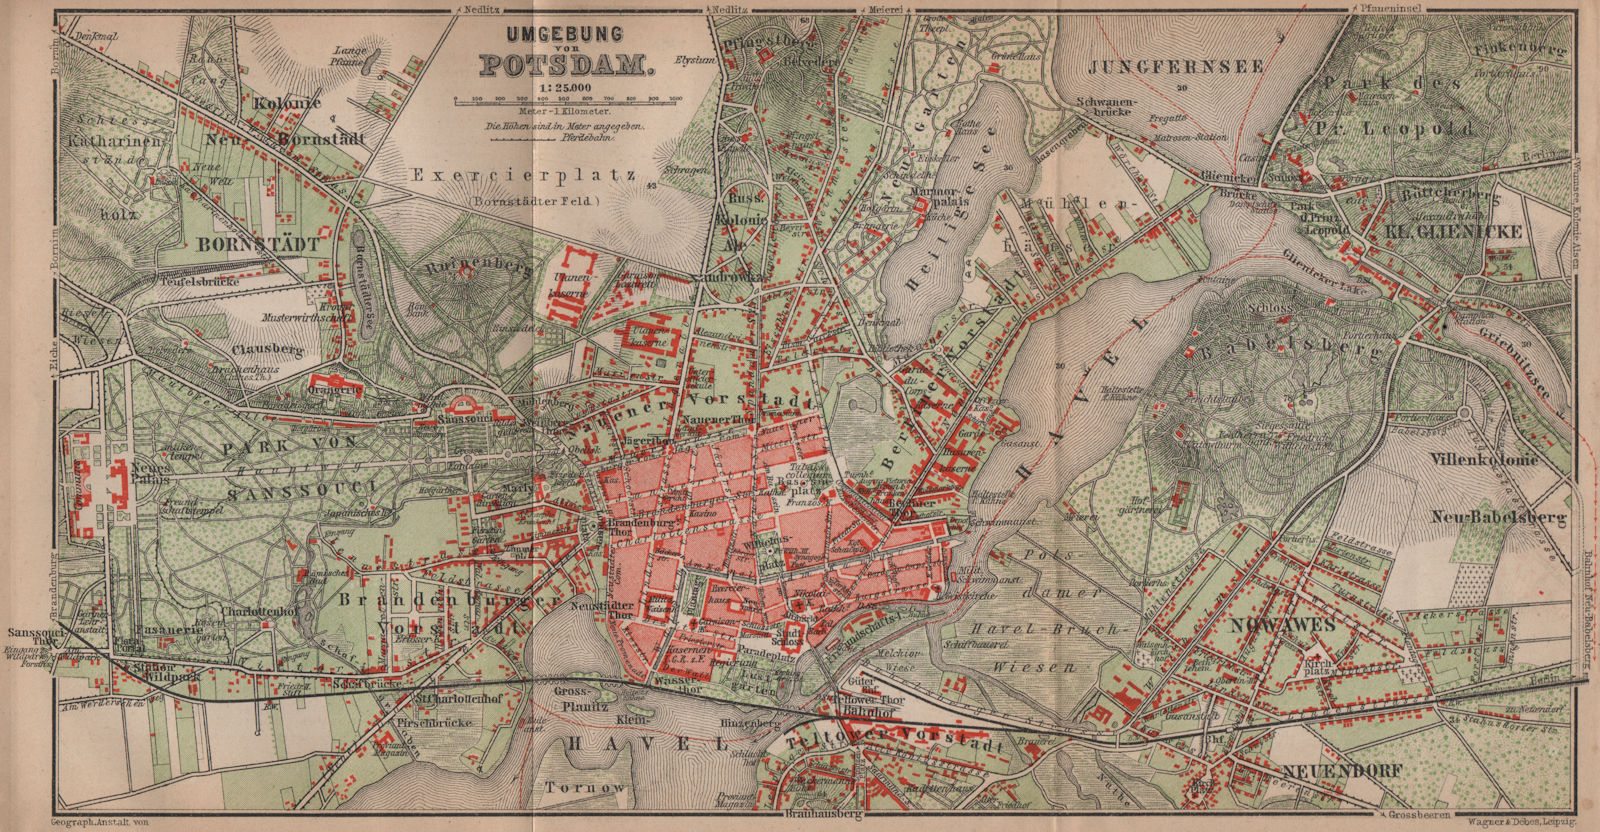 POTSDAM town city stadtplan & environs/umgebung. Nowawes. Brandenburg 1900 map